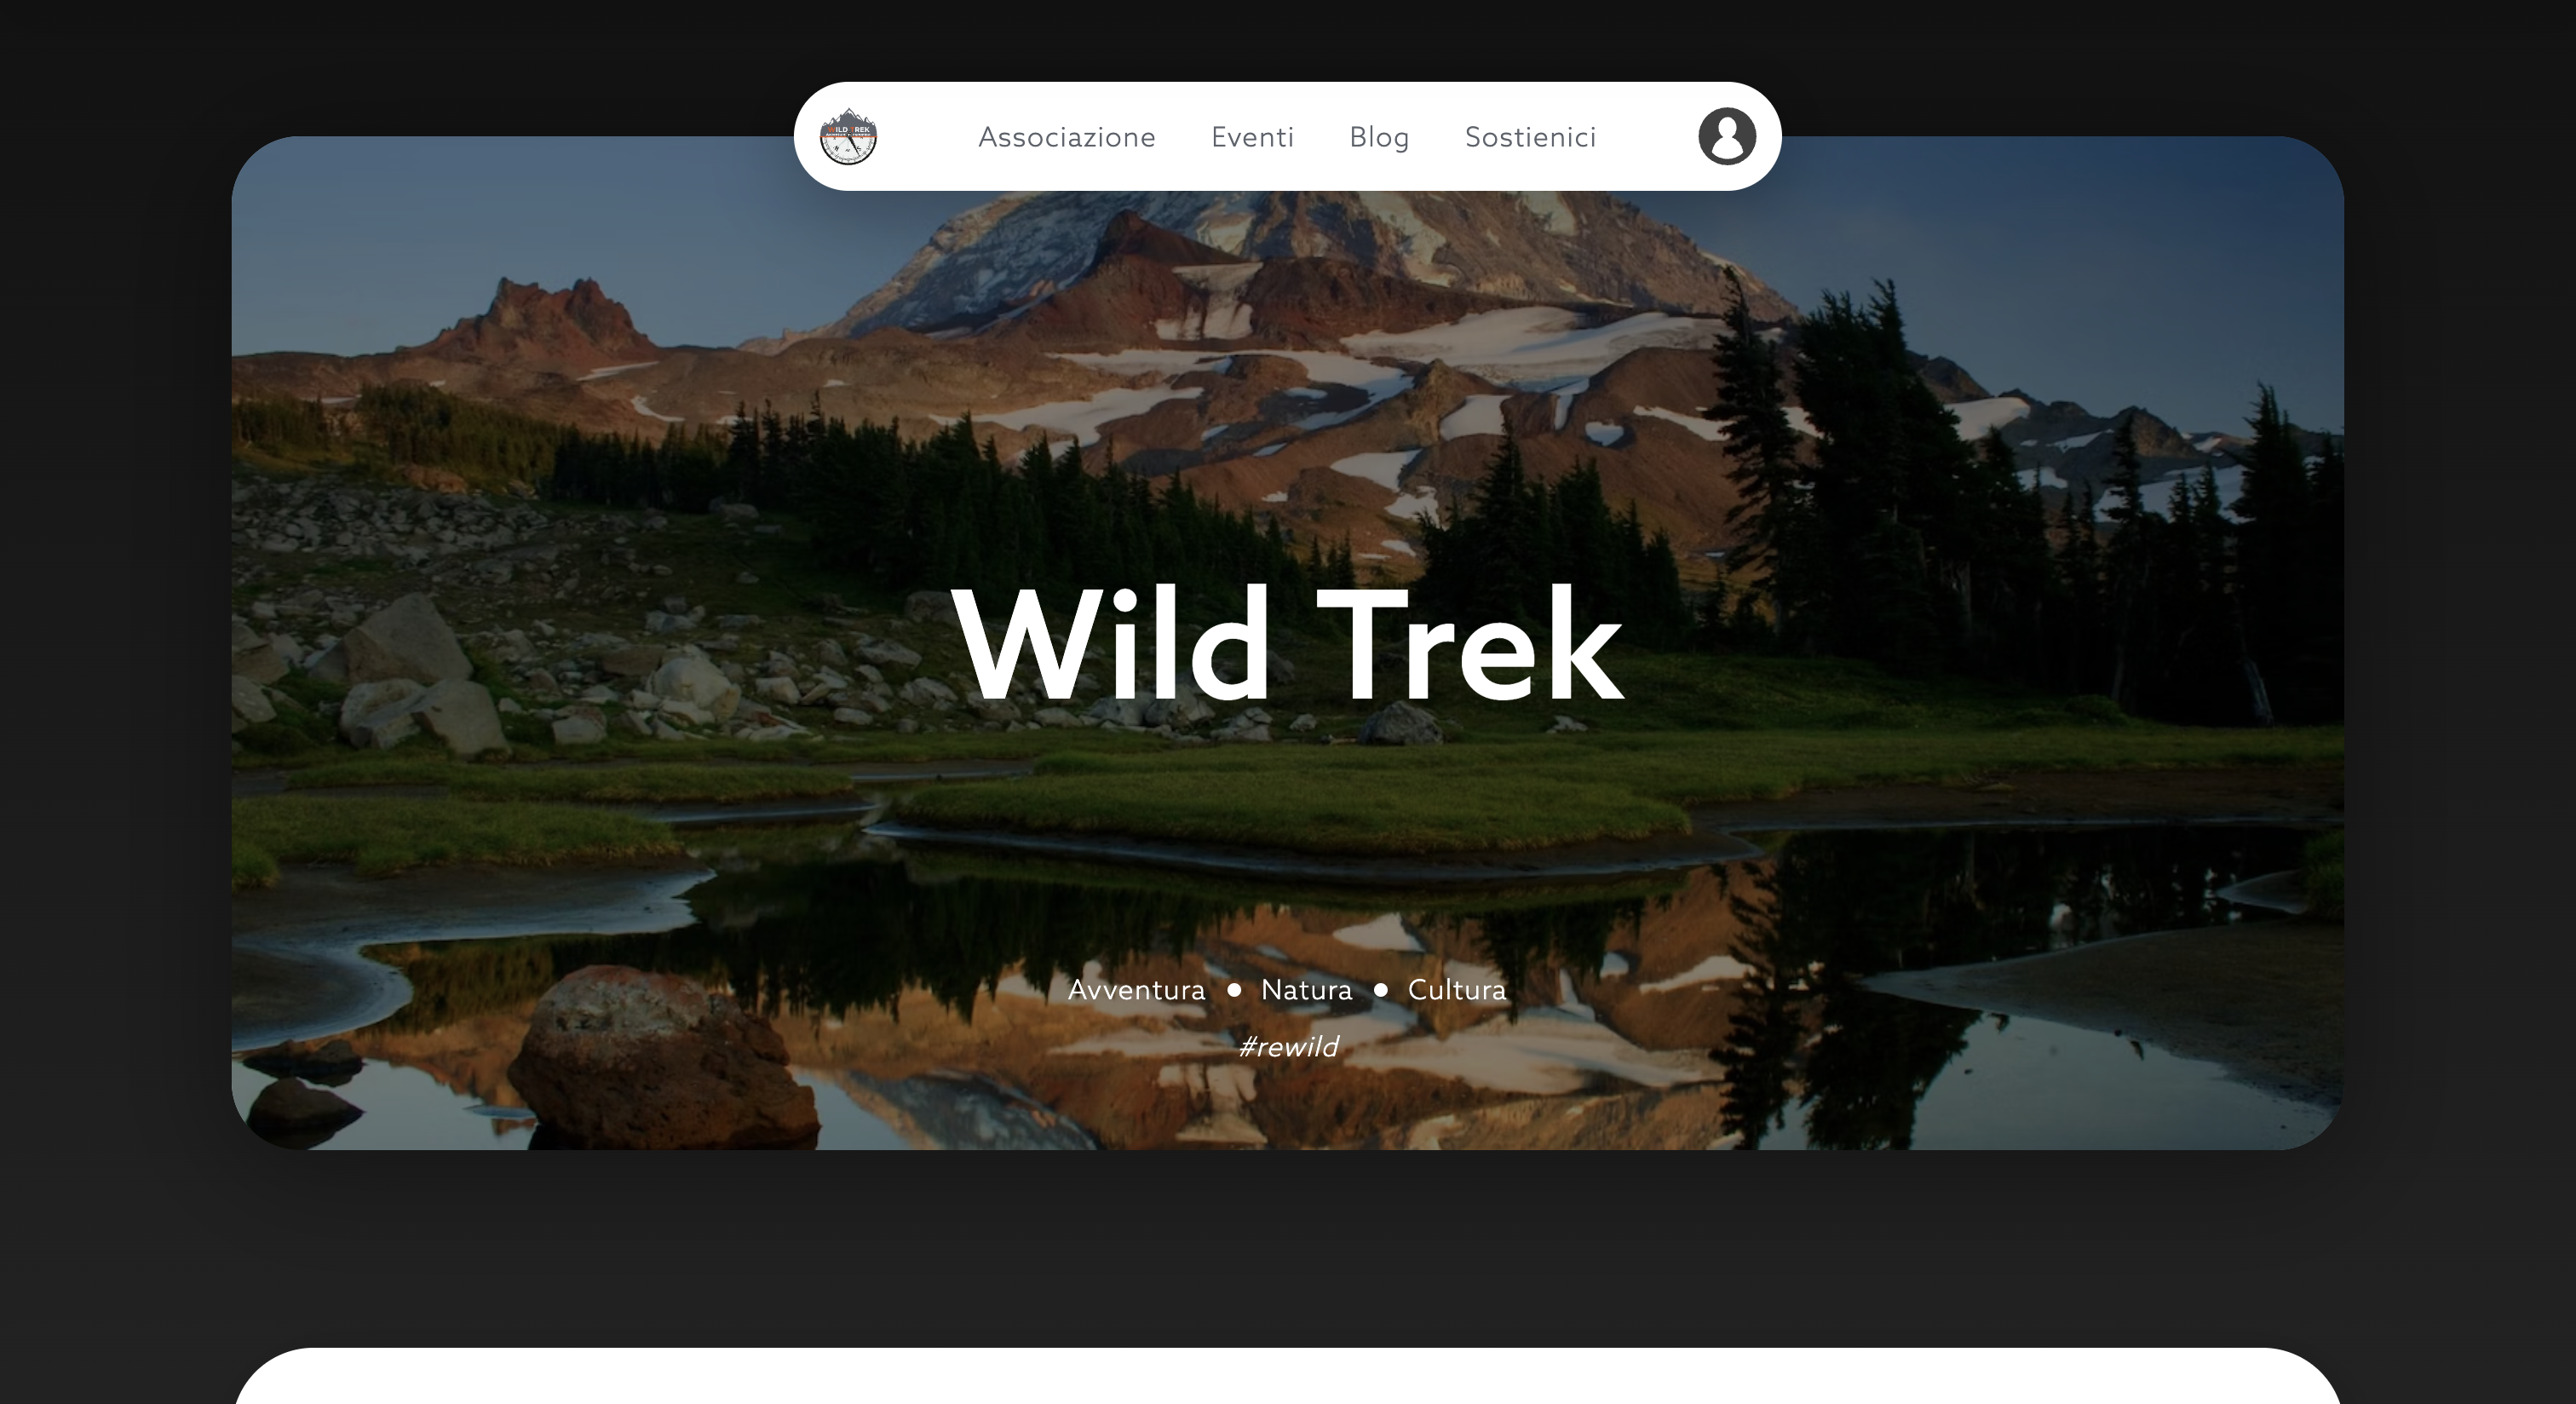 Visit Wild Trek website